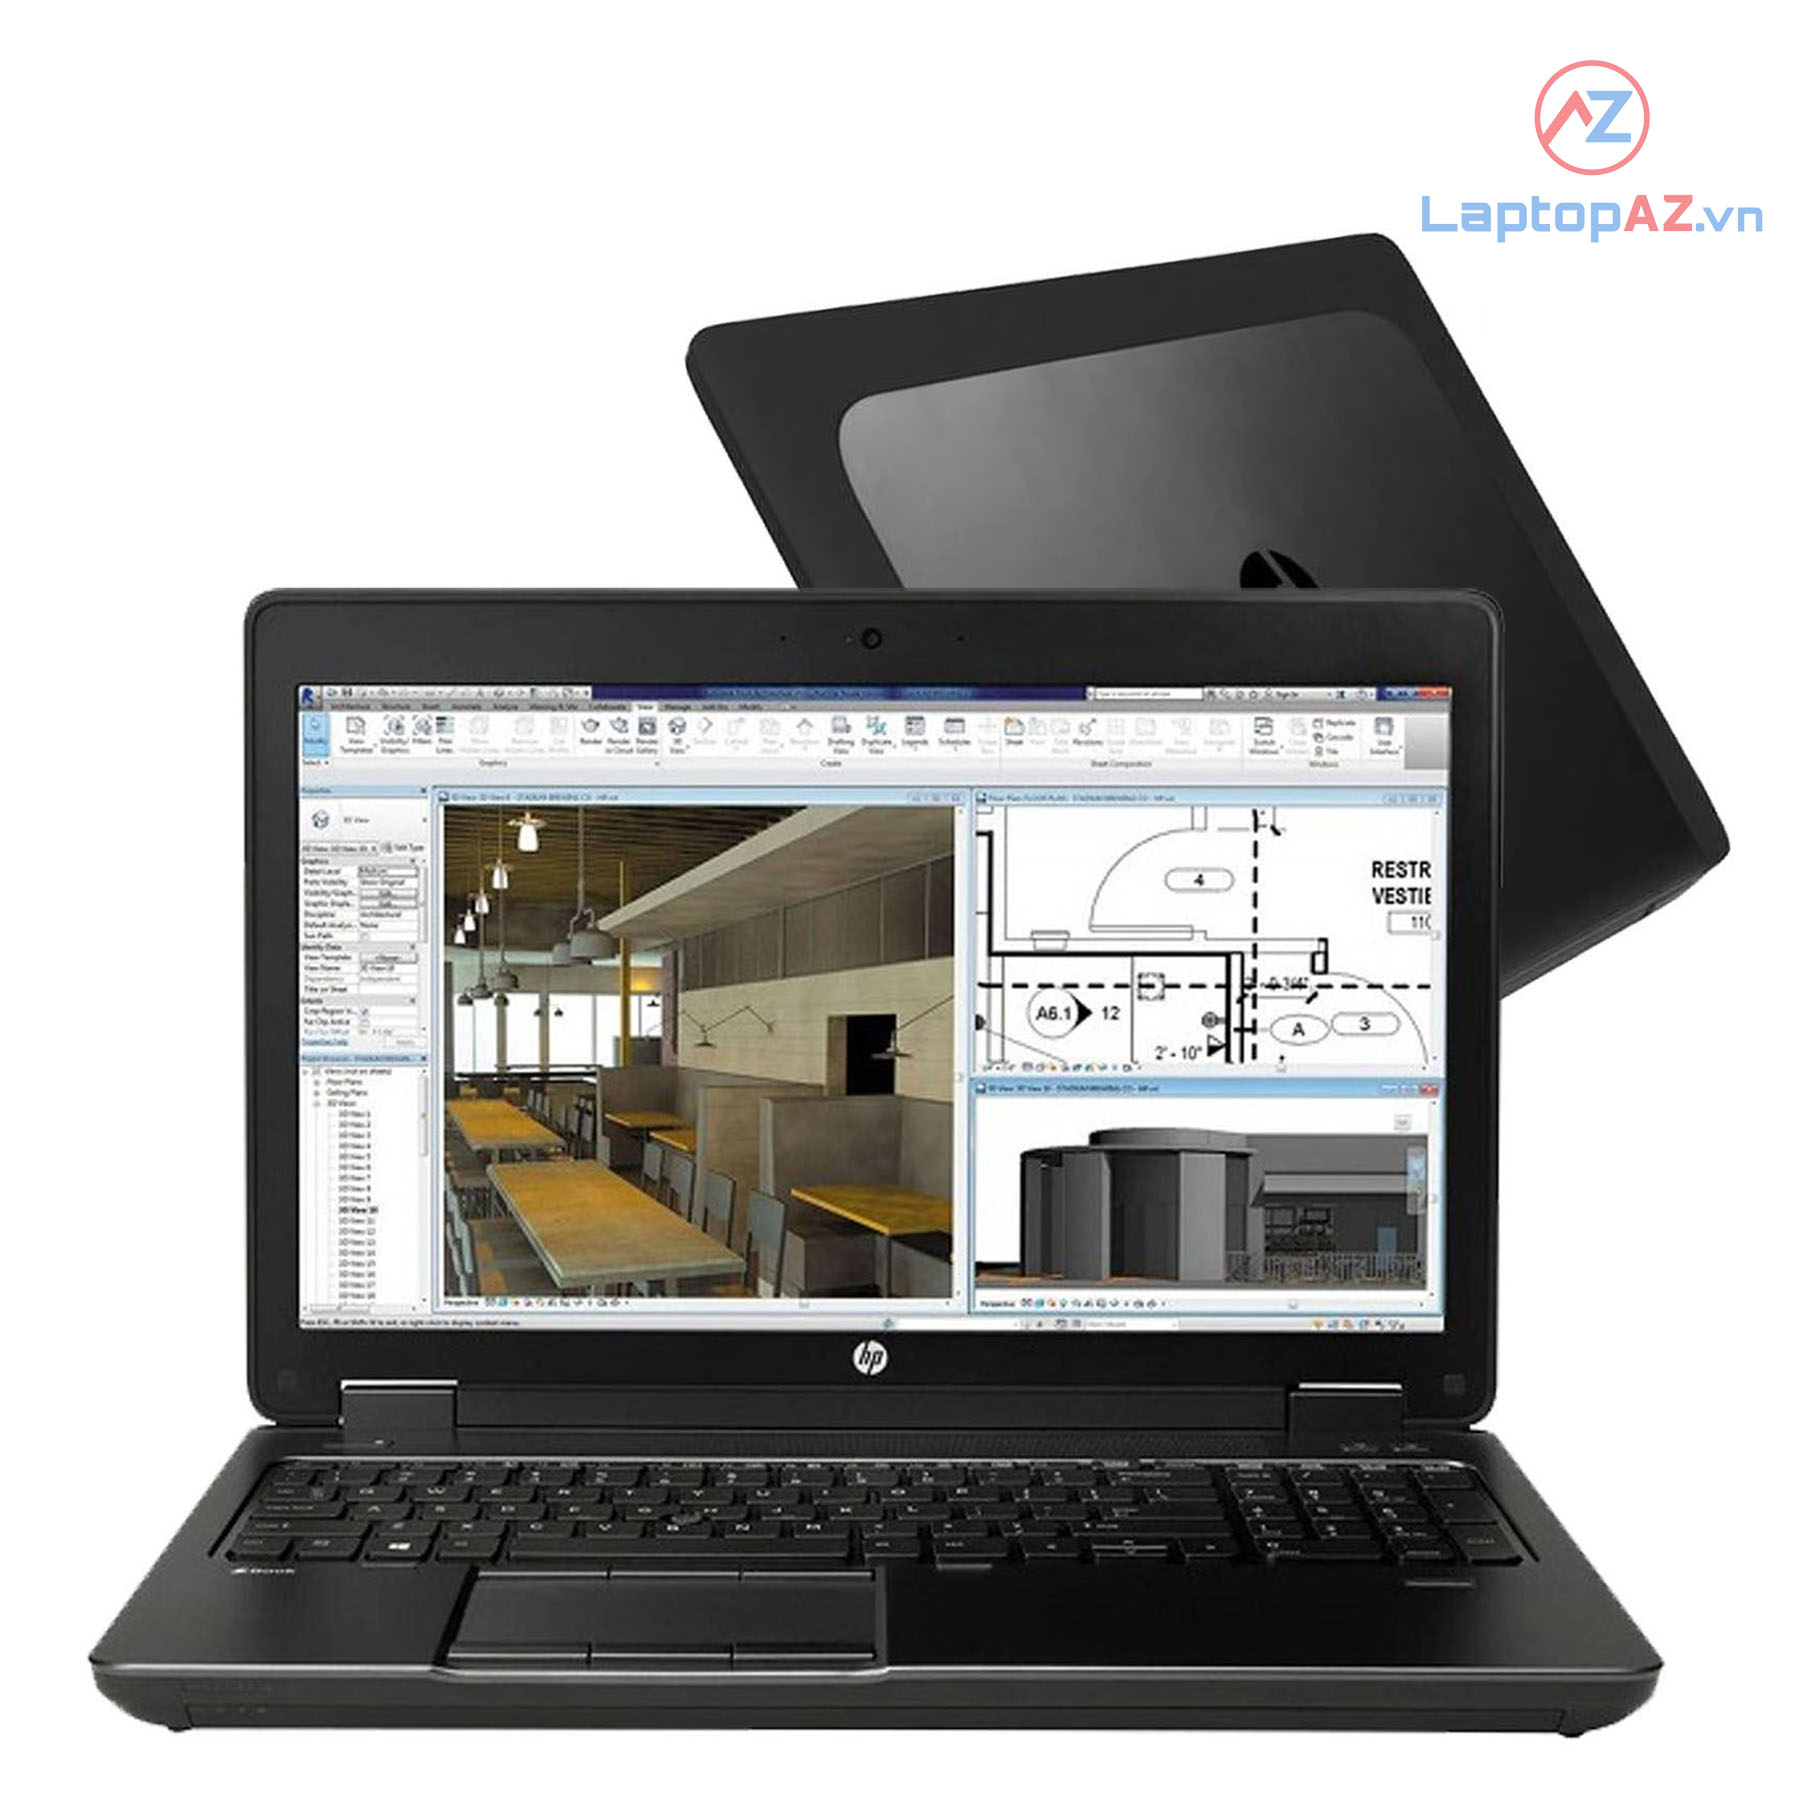 Laptop HP Zbook 15 G2 (Core i7-4810MQ, 8GB, 500GB, VGA 2GB NVIDIA K1100M, 15.6 inch FHD)